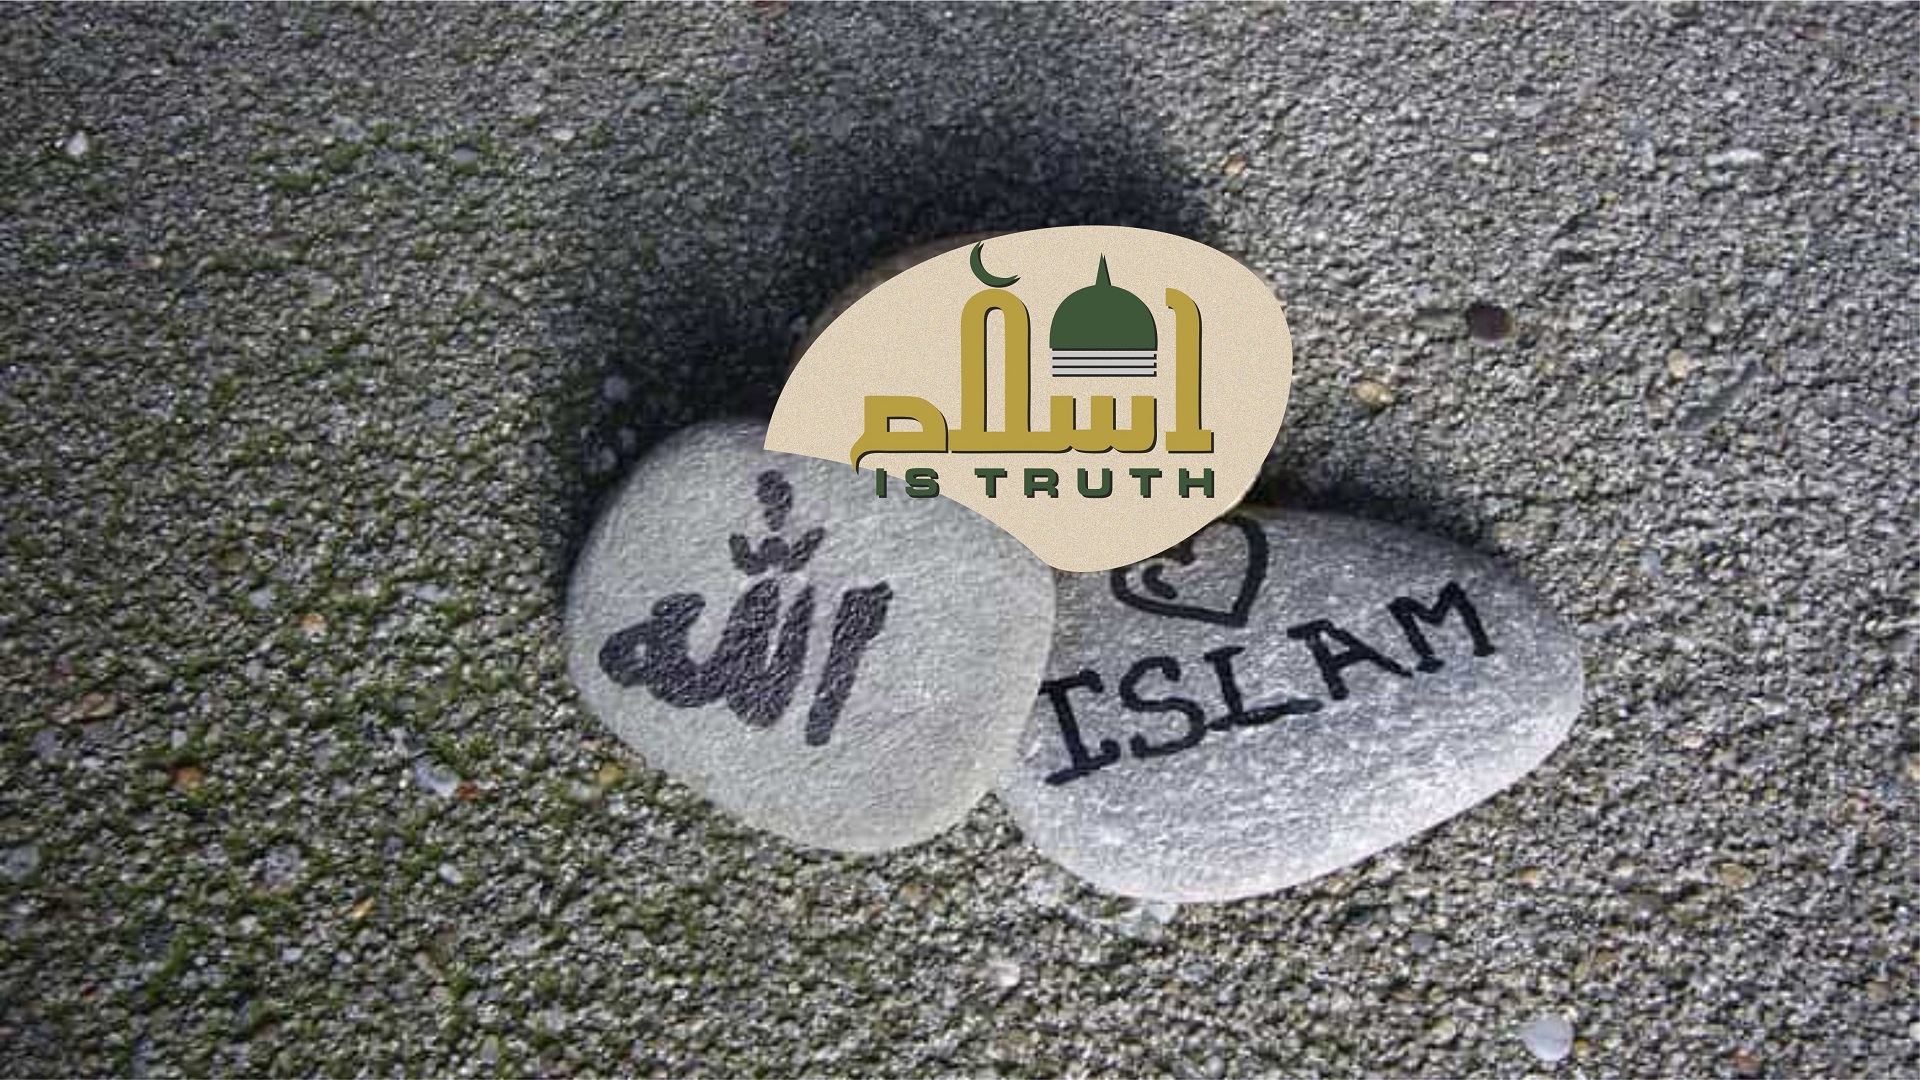 Islam is Truth